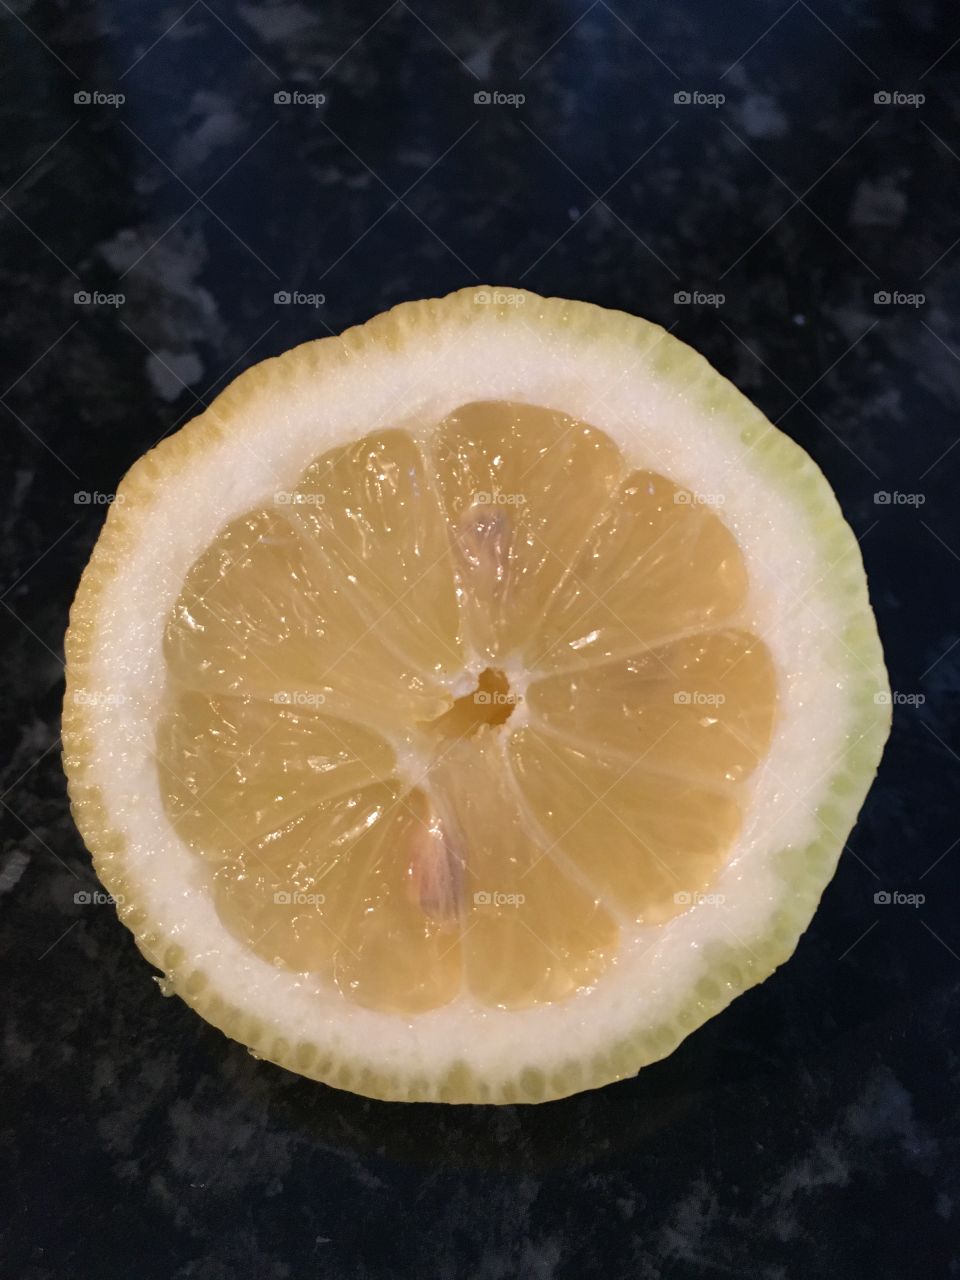 Lemon 🍋